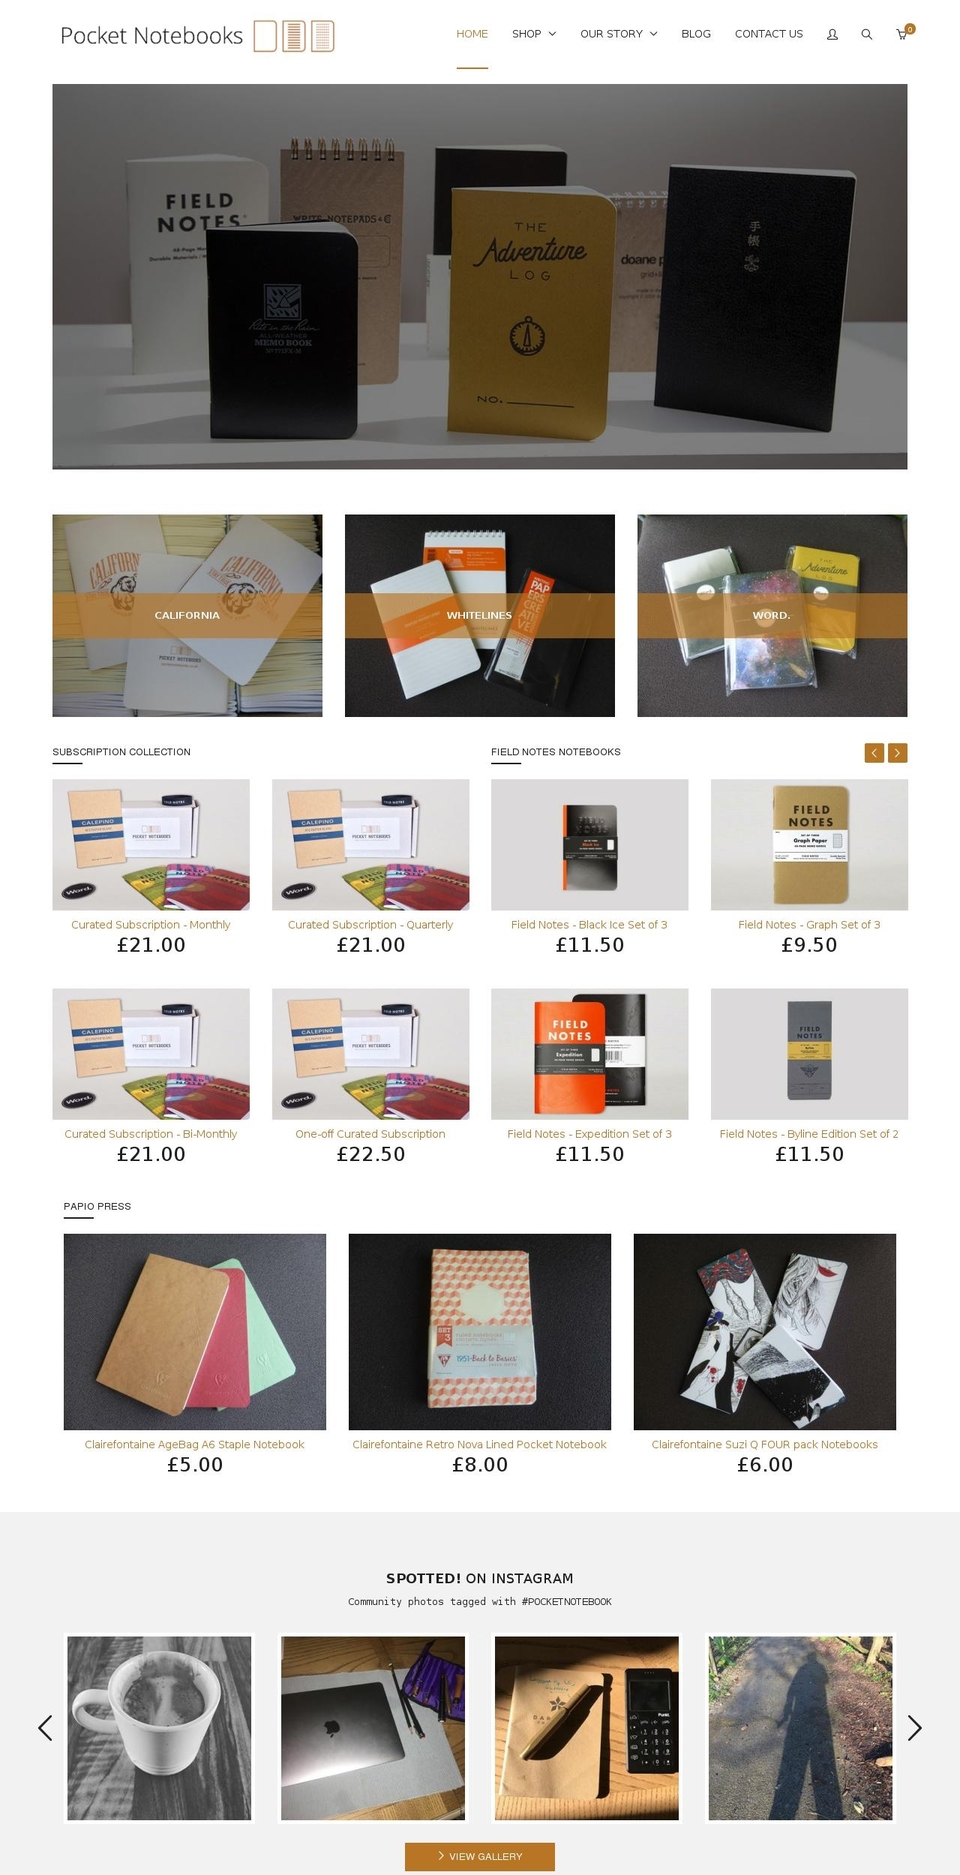 pocketnotebooks.co.uk shopify website screenshot